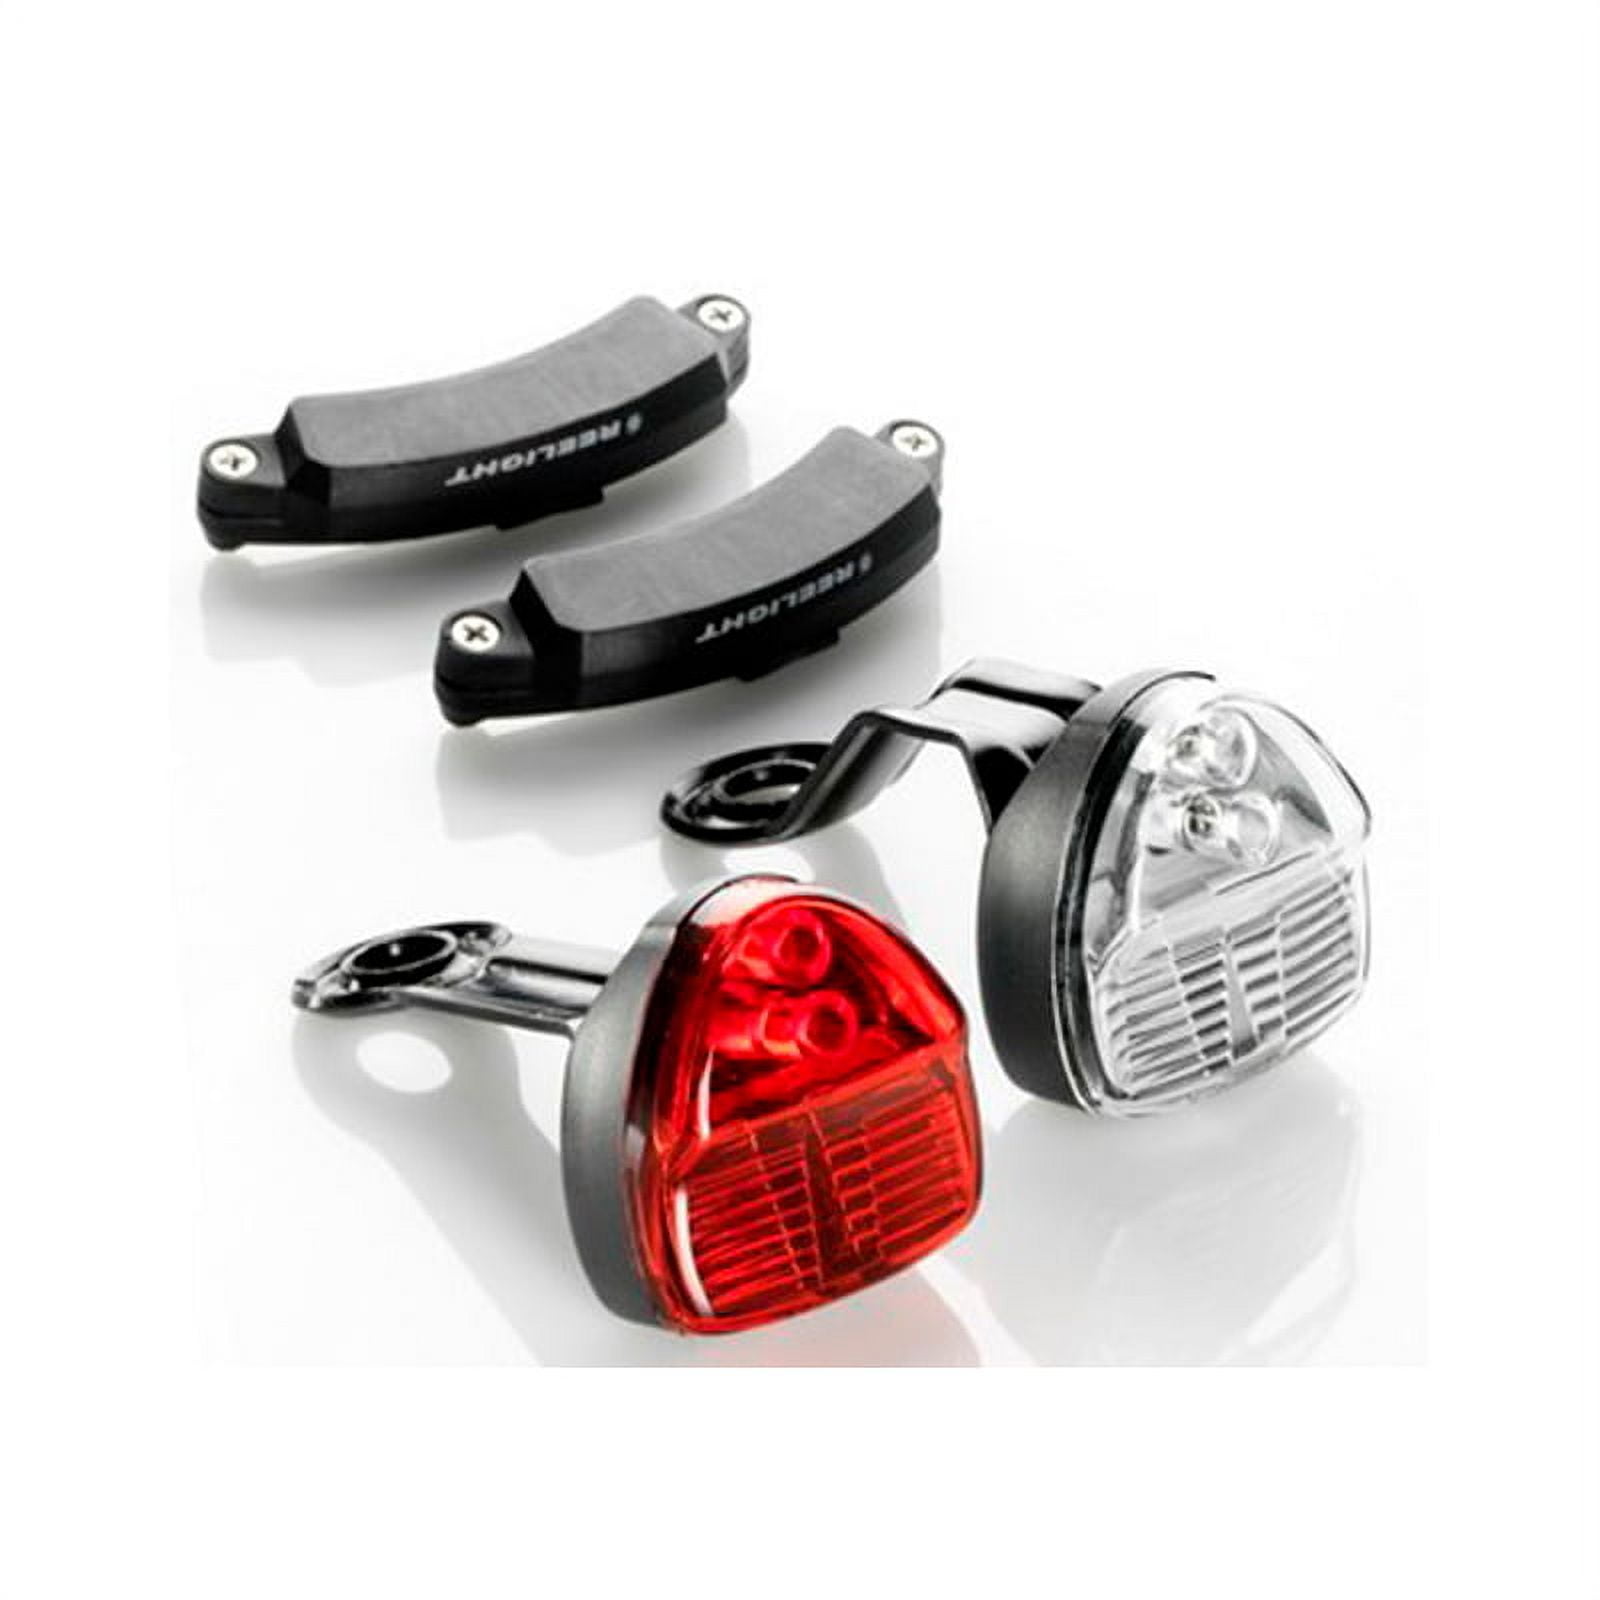 Reelight SL120 Flashing Compact Bicycle LED Headlight and Tail Light Set